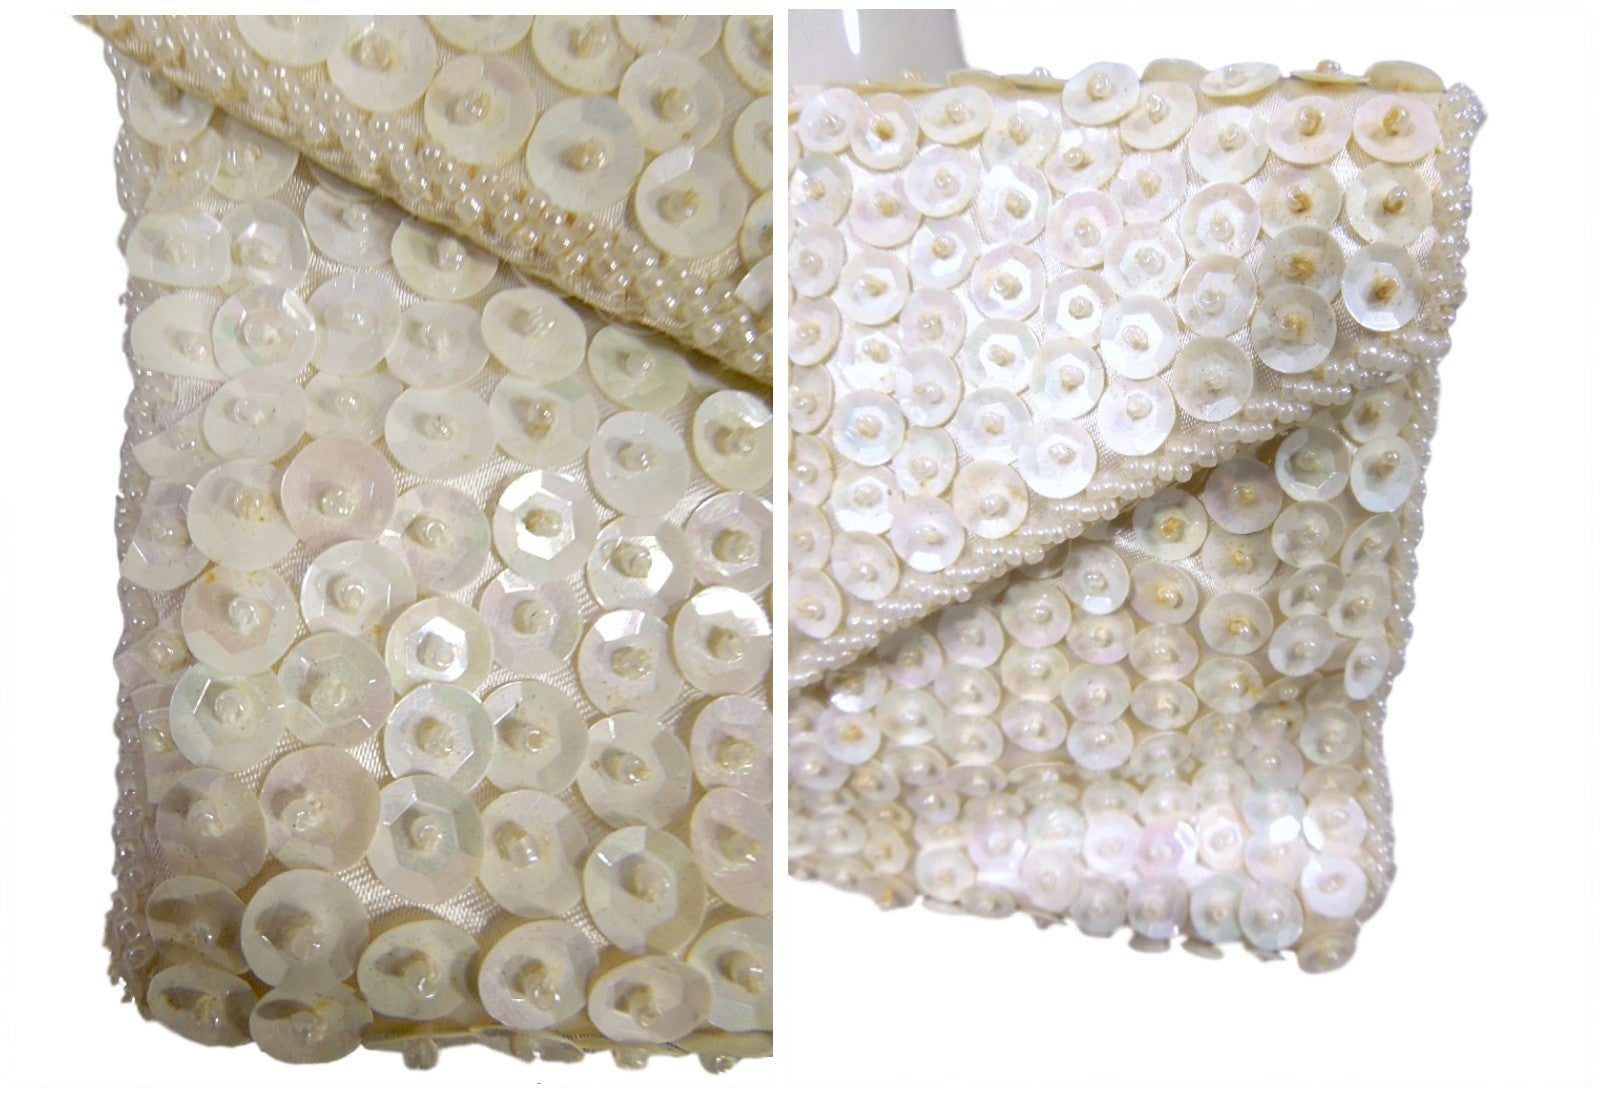 1950s Clutch Handbag Cream White Hand-Beaded Evening Bag by Walborg –  Better Dresses Vintage